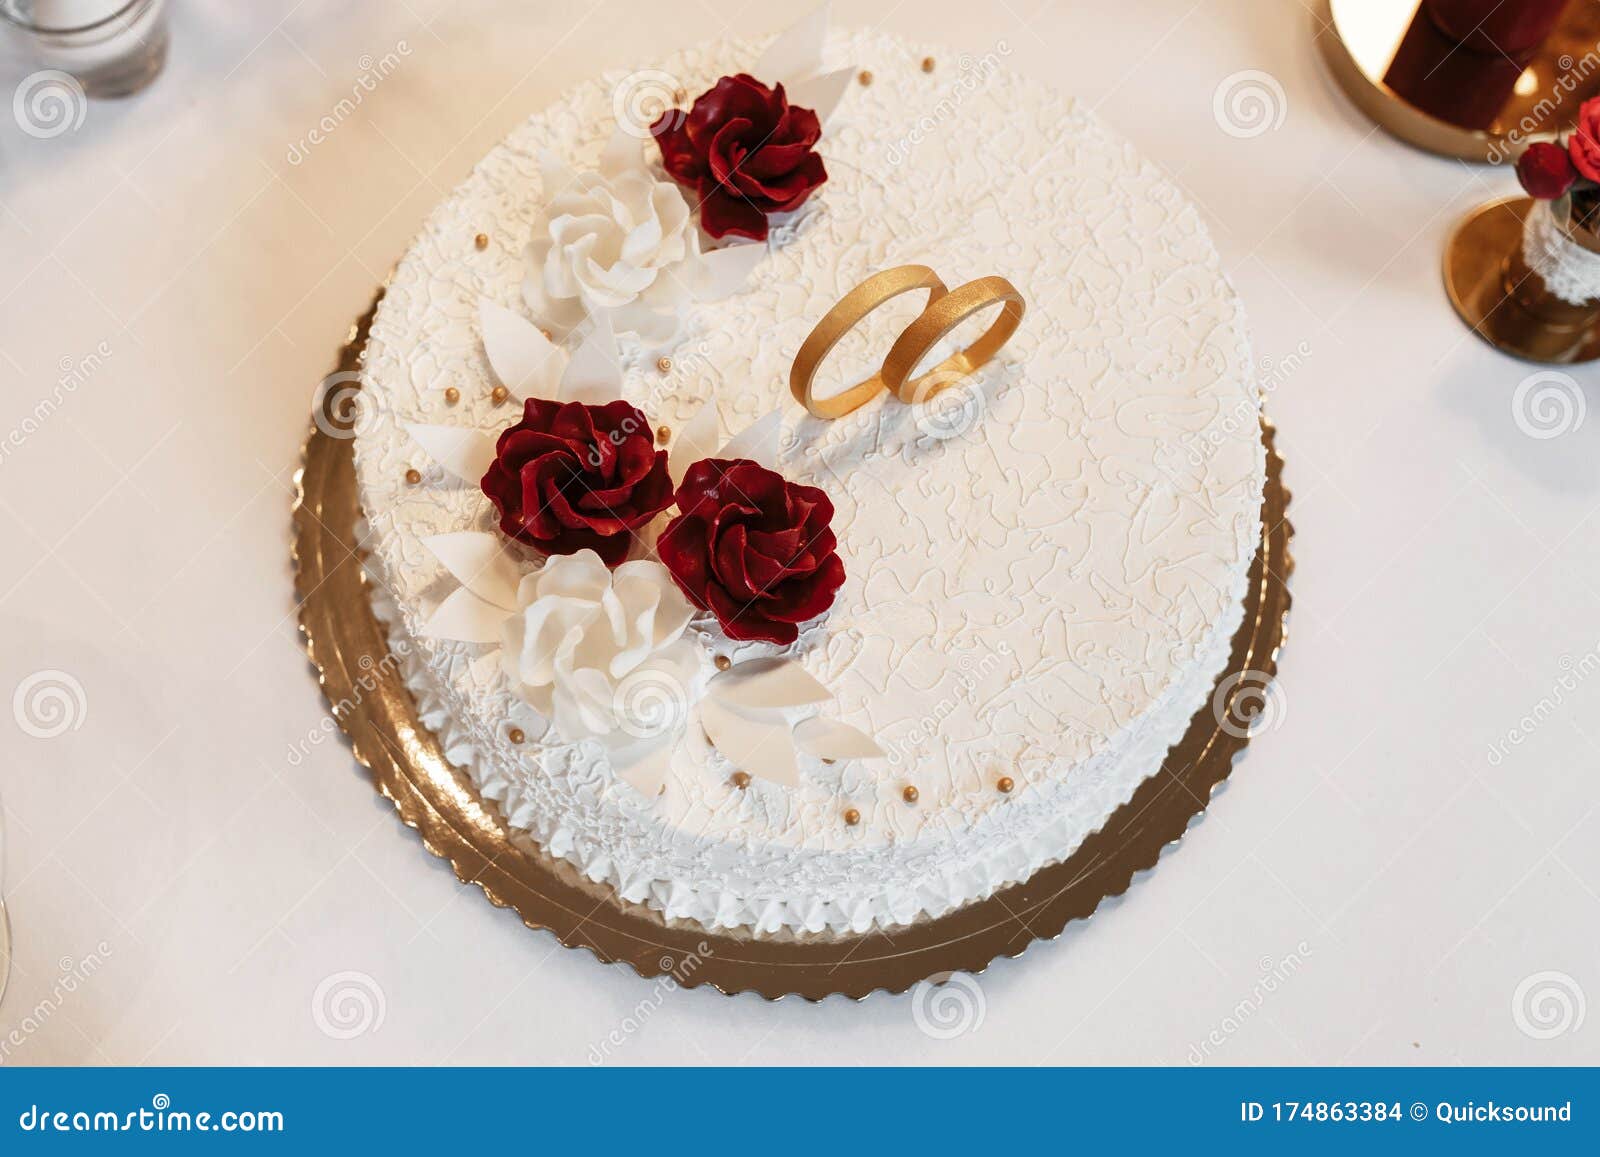 31 Engagement Cakes ideas | engagement cakes, cupcake cakes, cake decorating